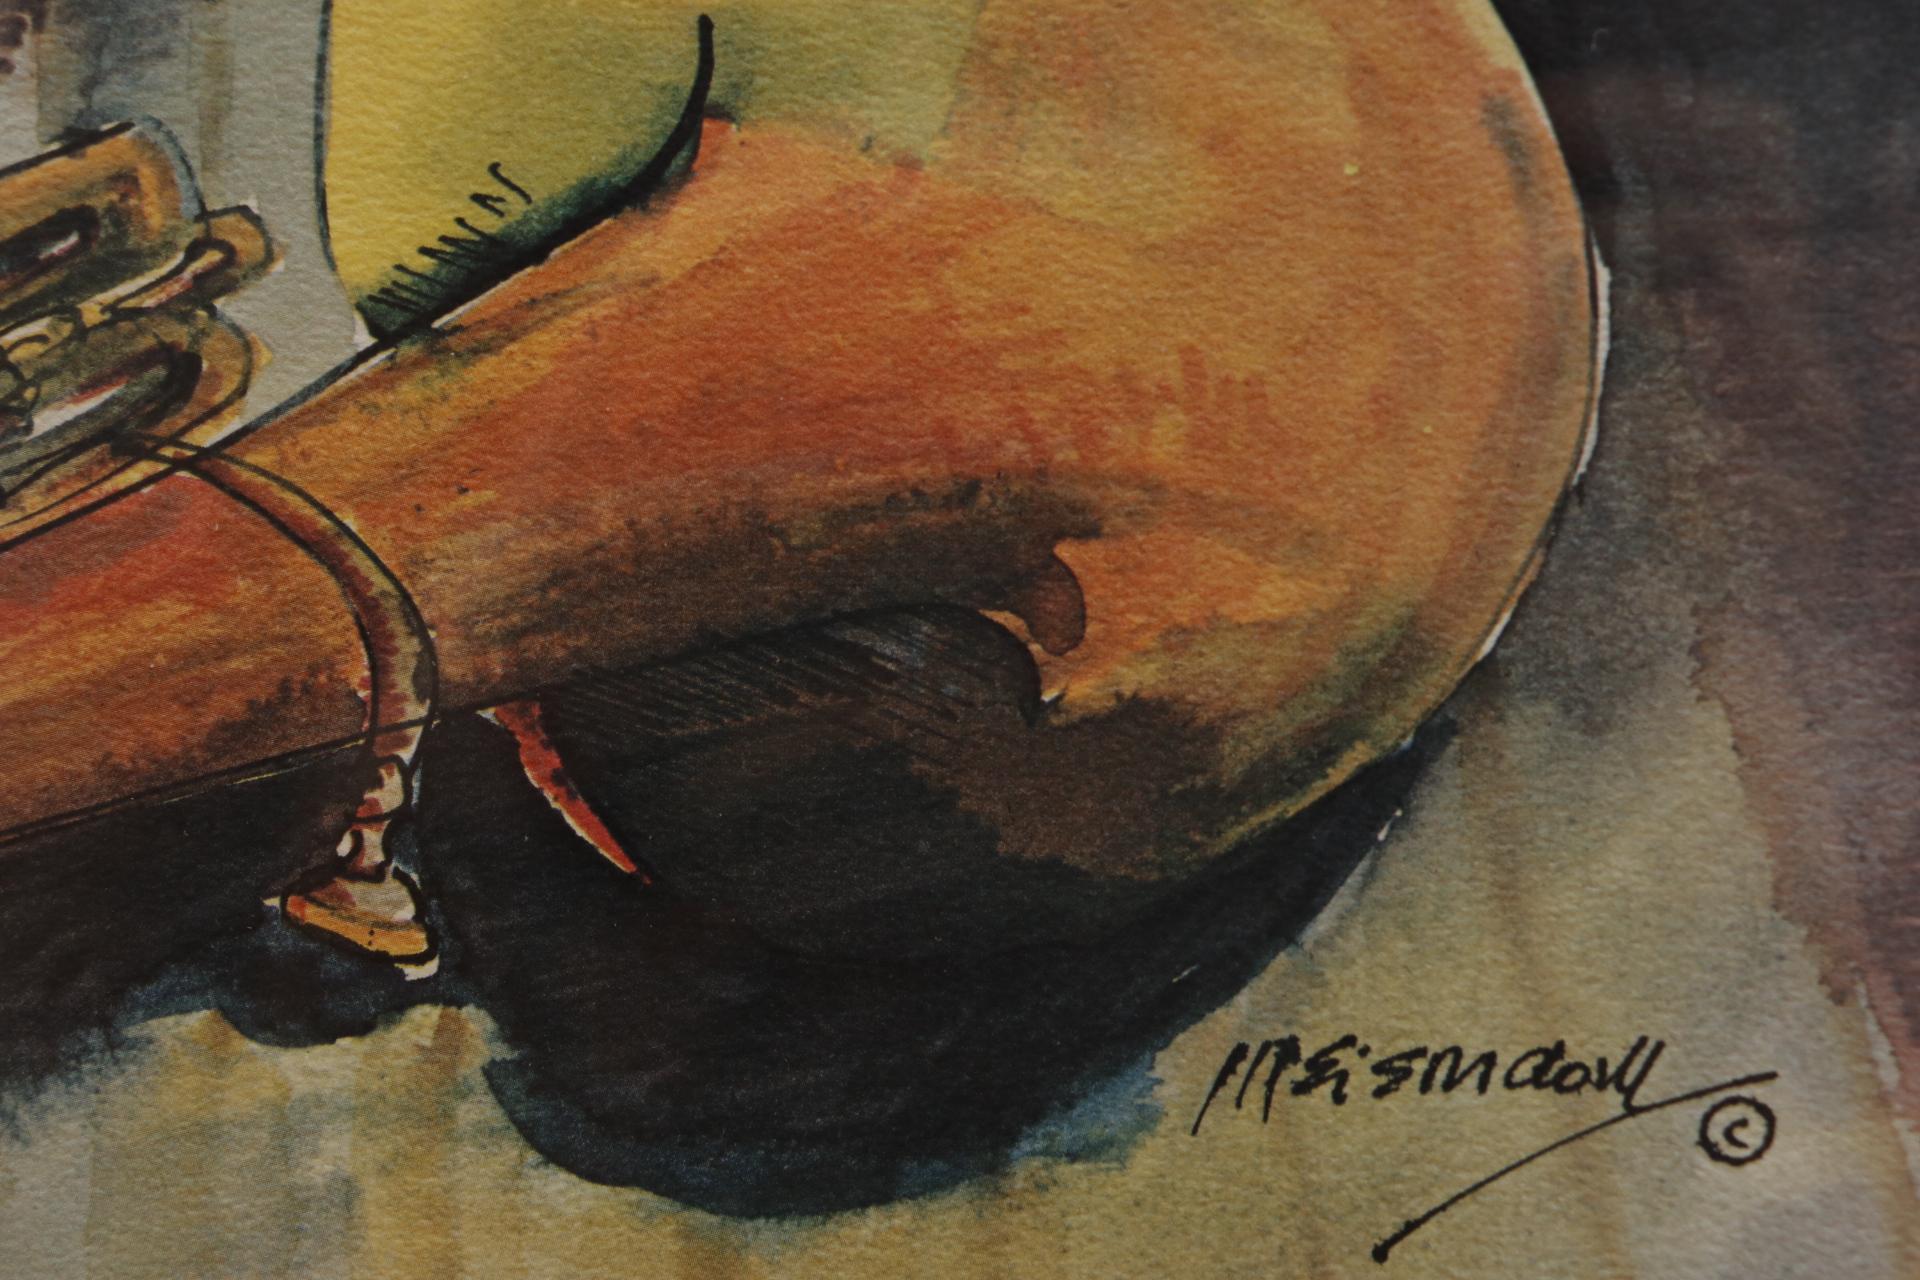 Expressionist 1978 Leo Meiersdorff “Jazz New Orleans” Framed Poster